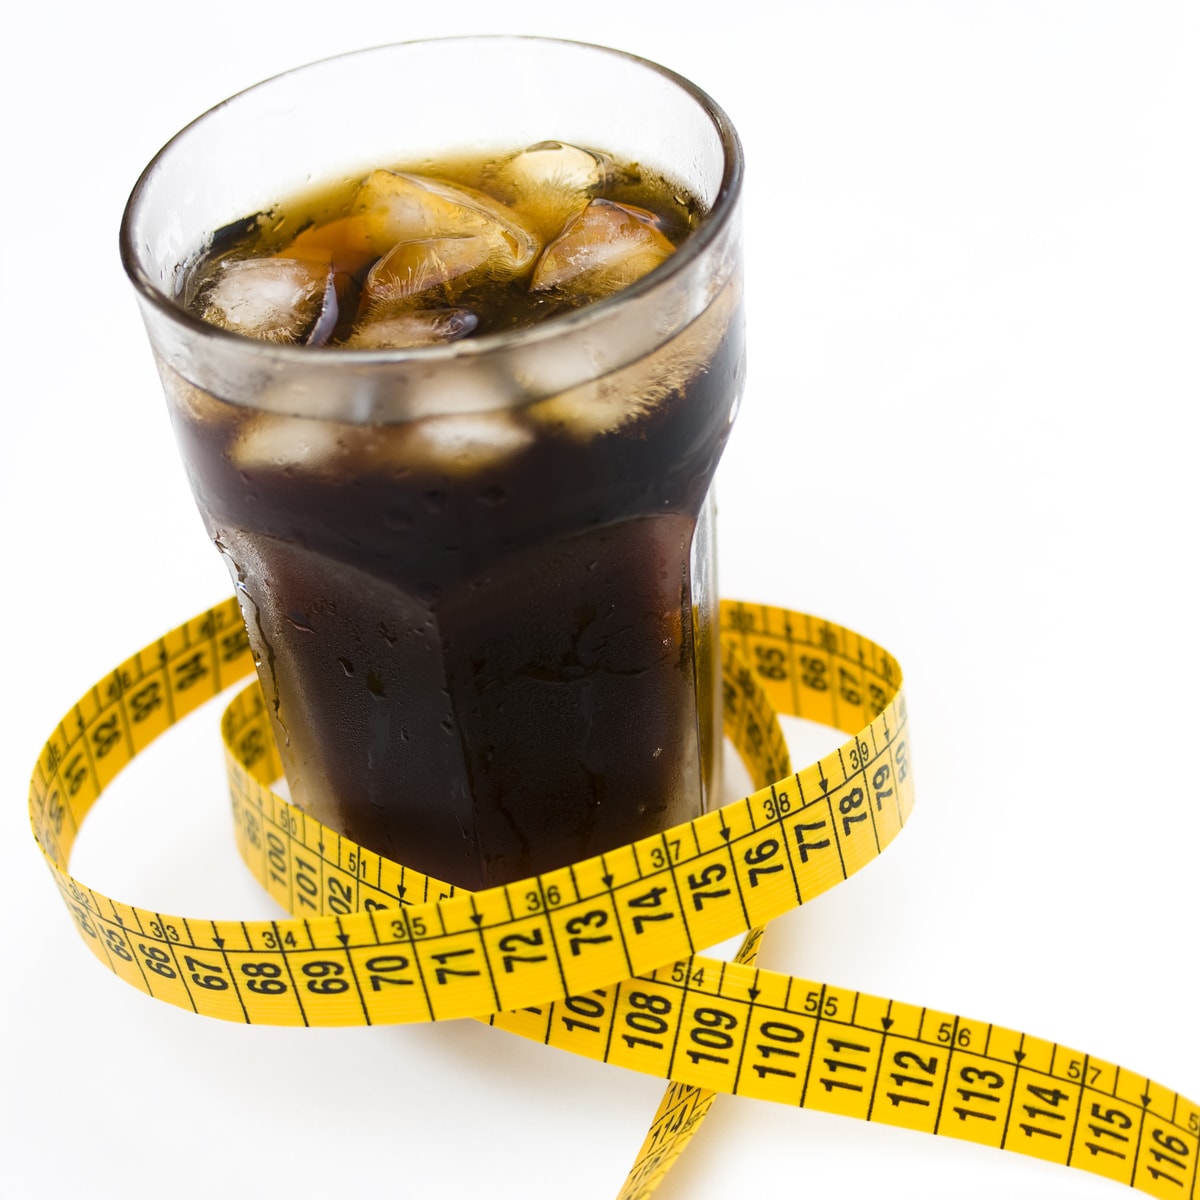 Coke Zero vs. Diet Coke: Is There a Difference?